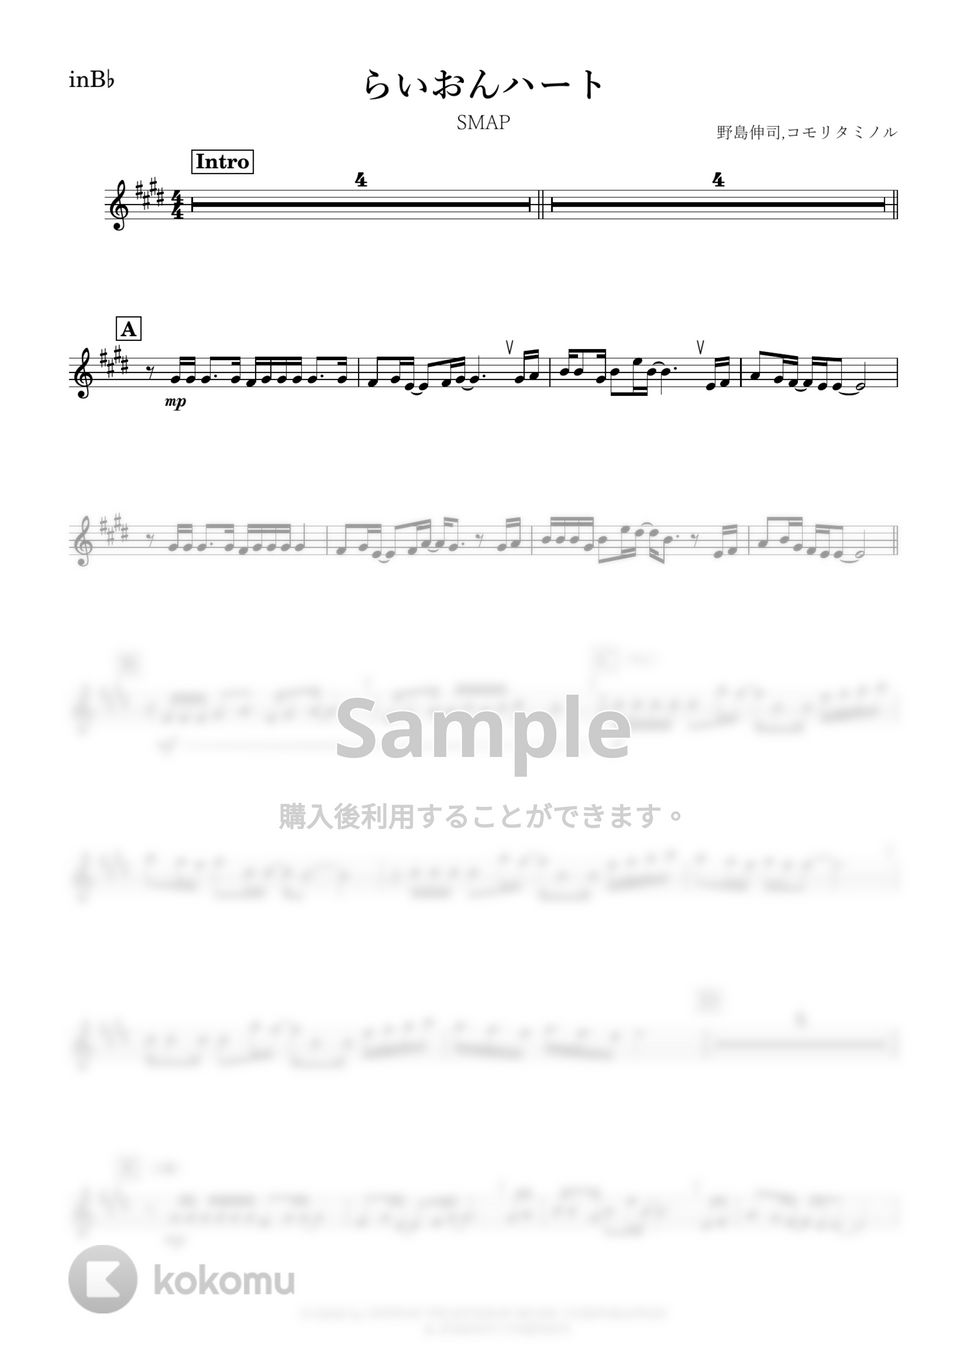 SMAP - らいおんハート (B♭) by kanamusic